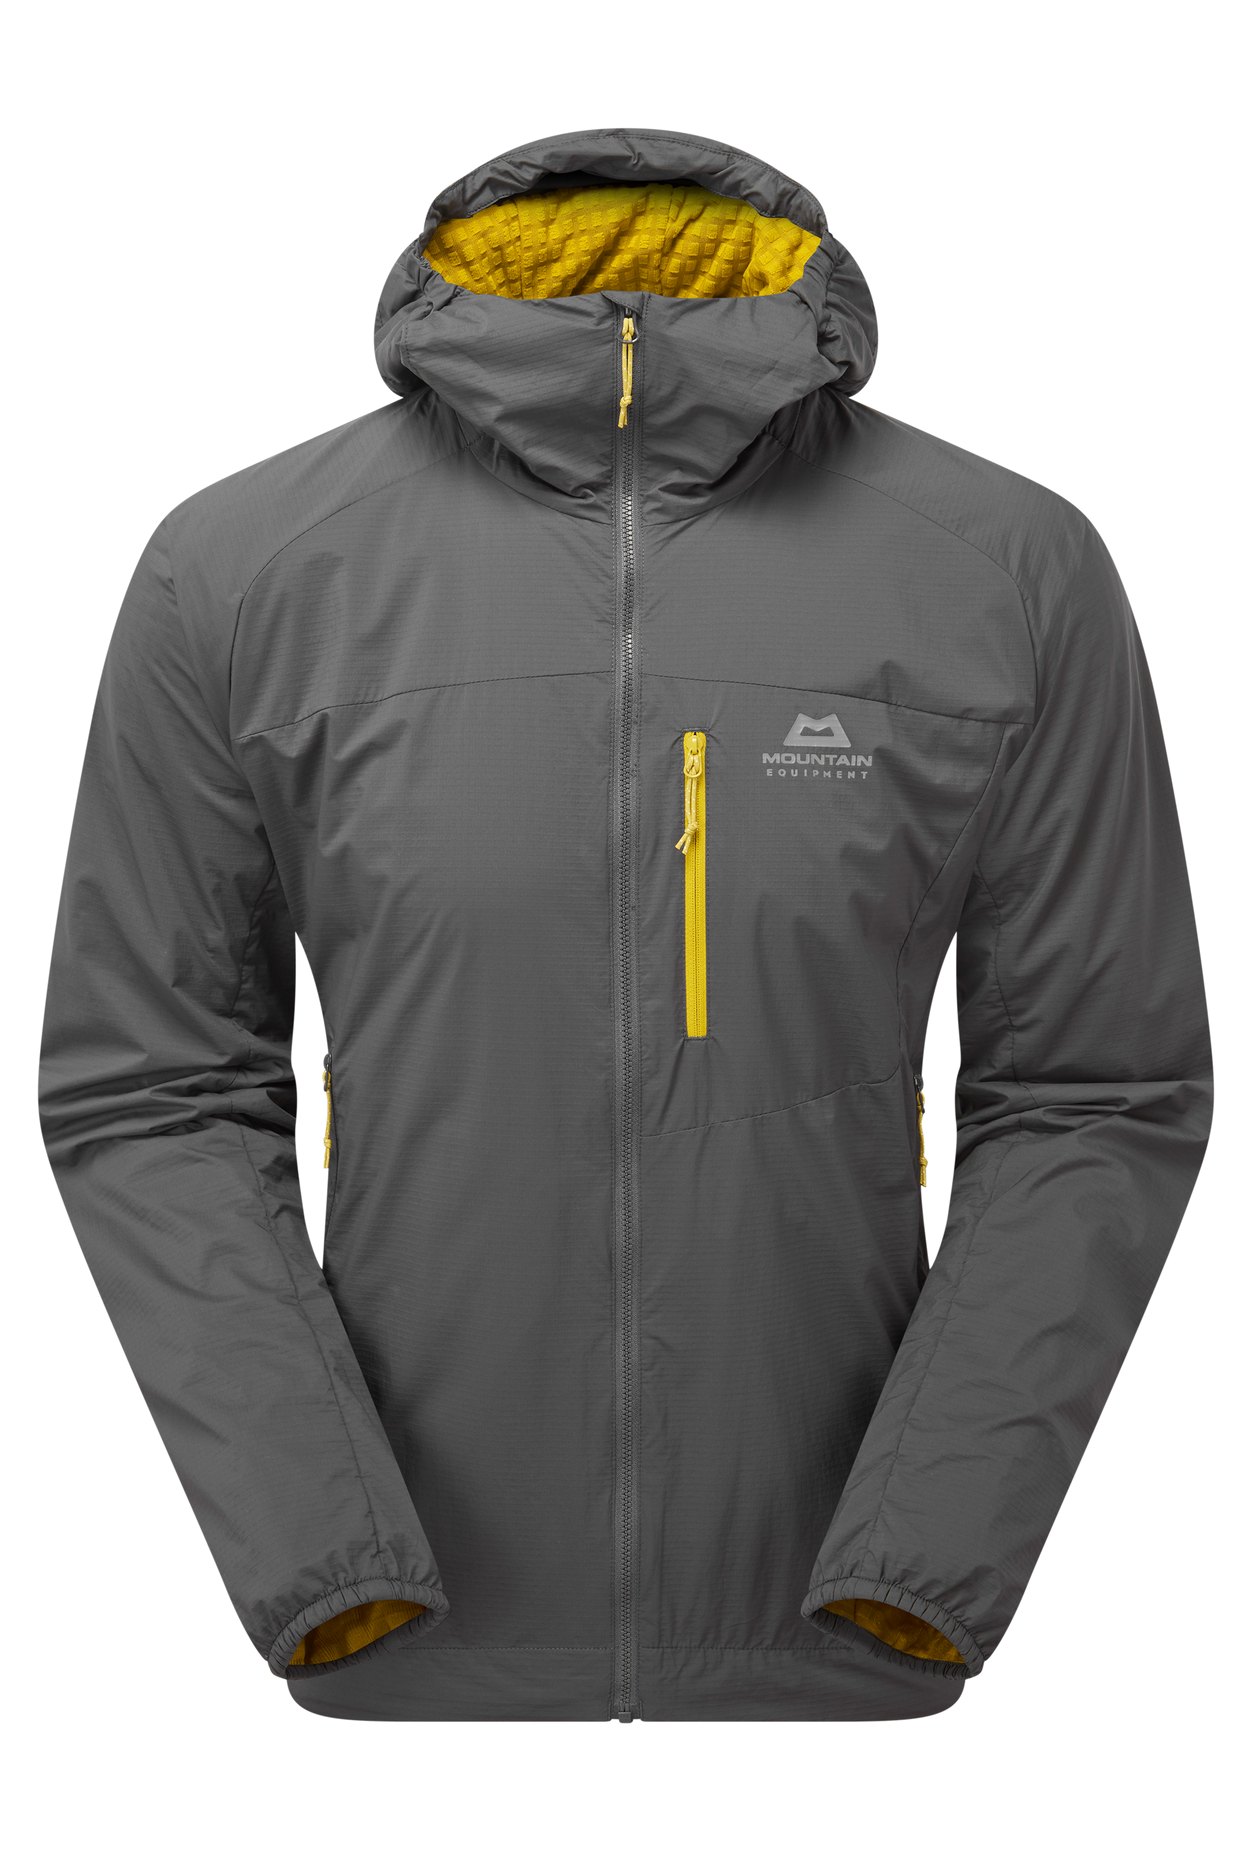 Mountain equipment pánská větruodolná bunda Aerotherm Mens Jacket Barva: Anvil Grey, Velikost: S